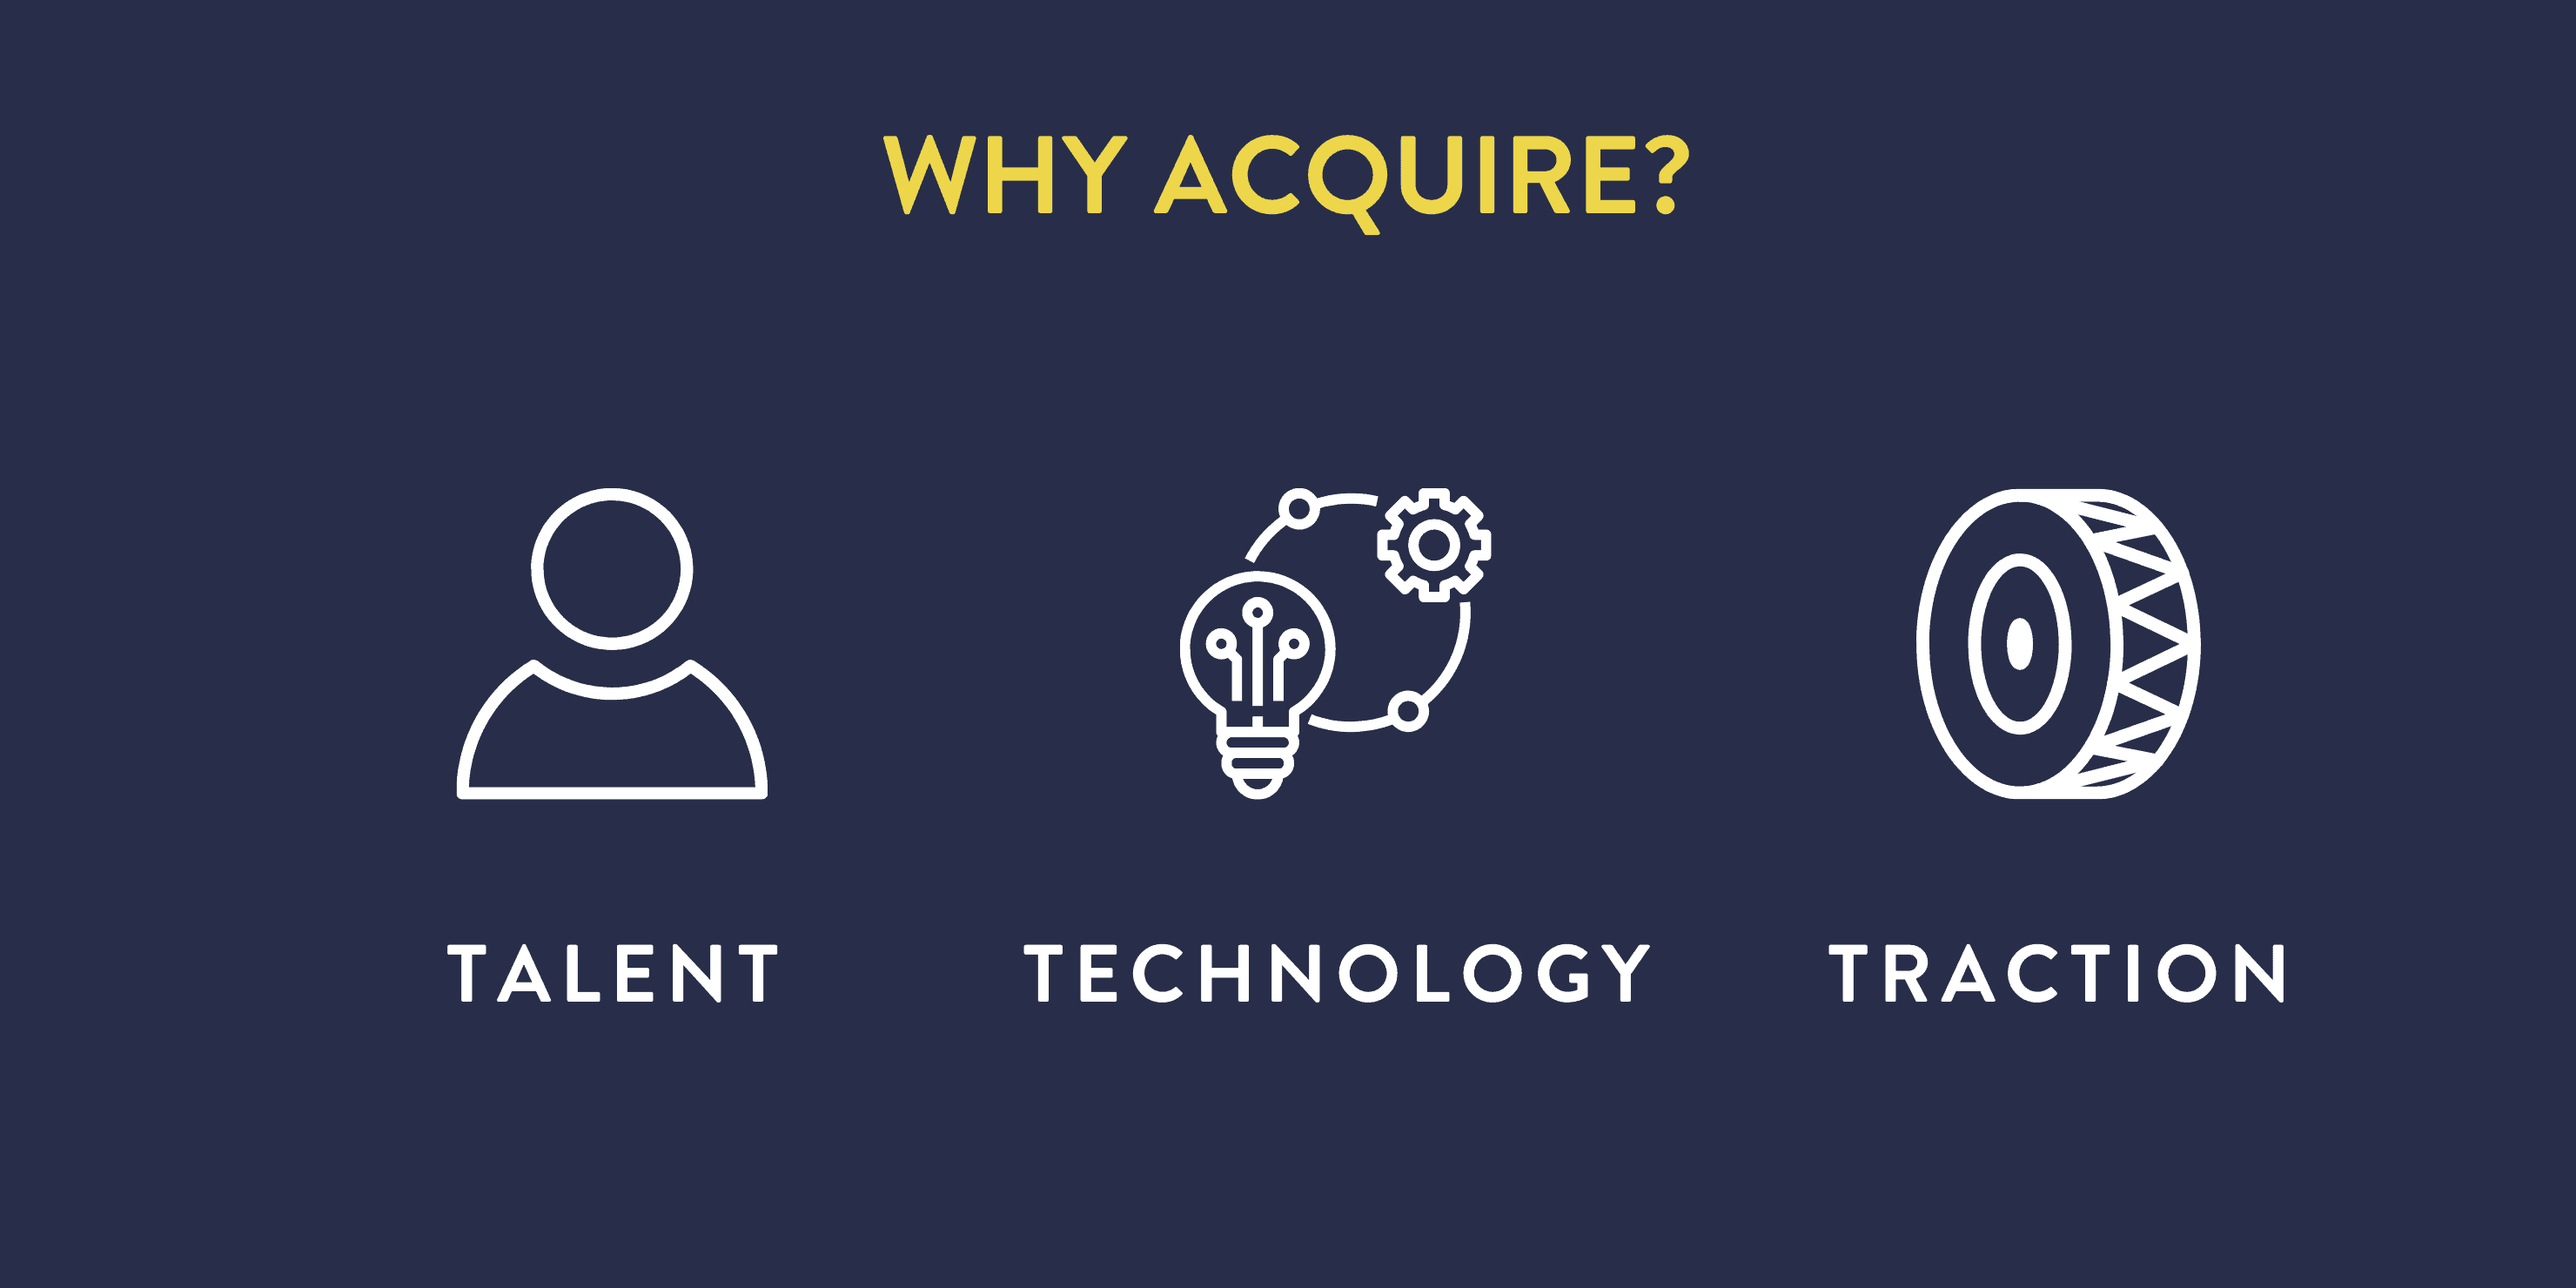 Why Acquire a company